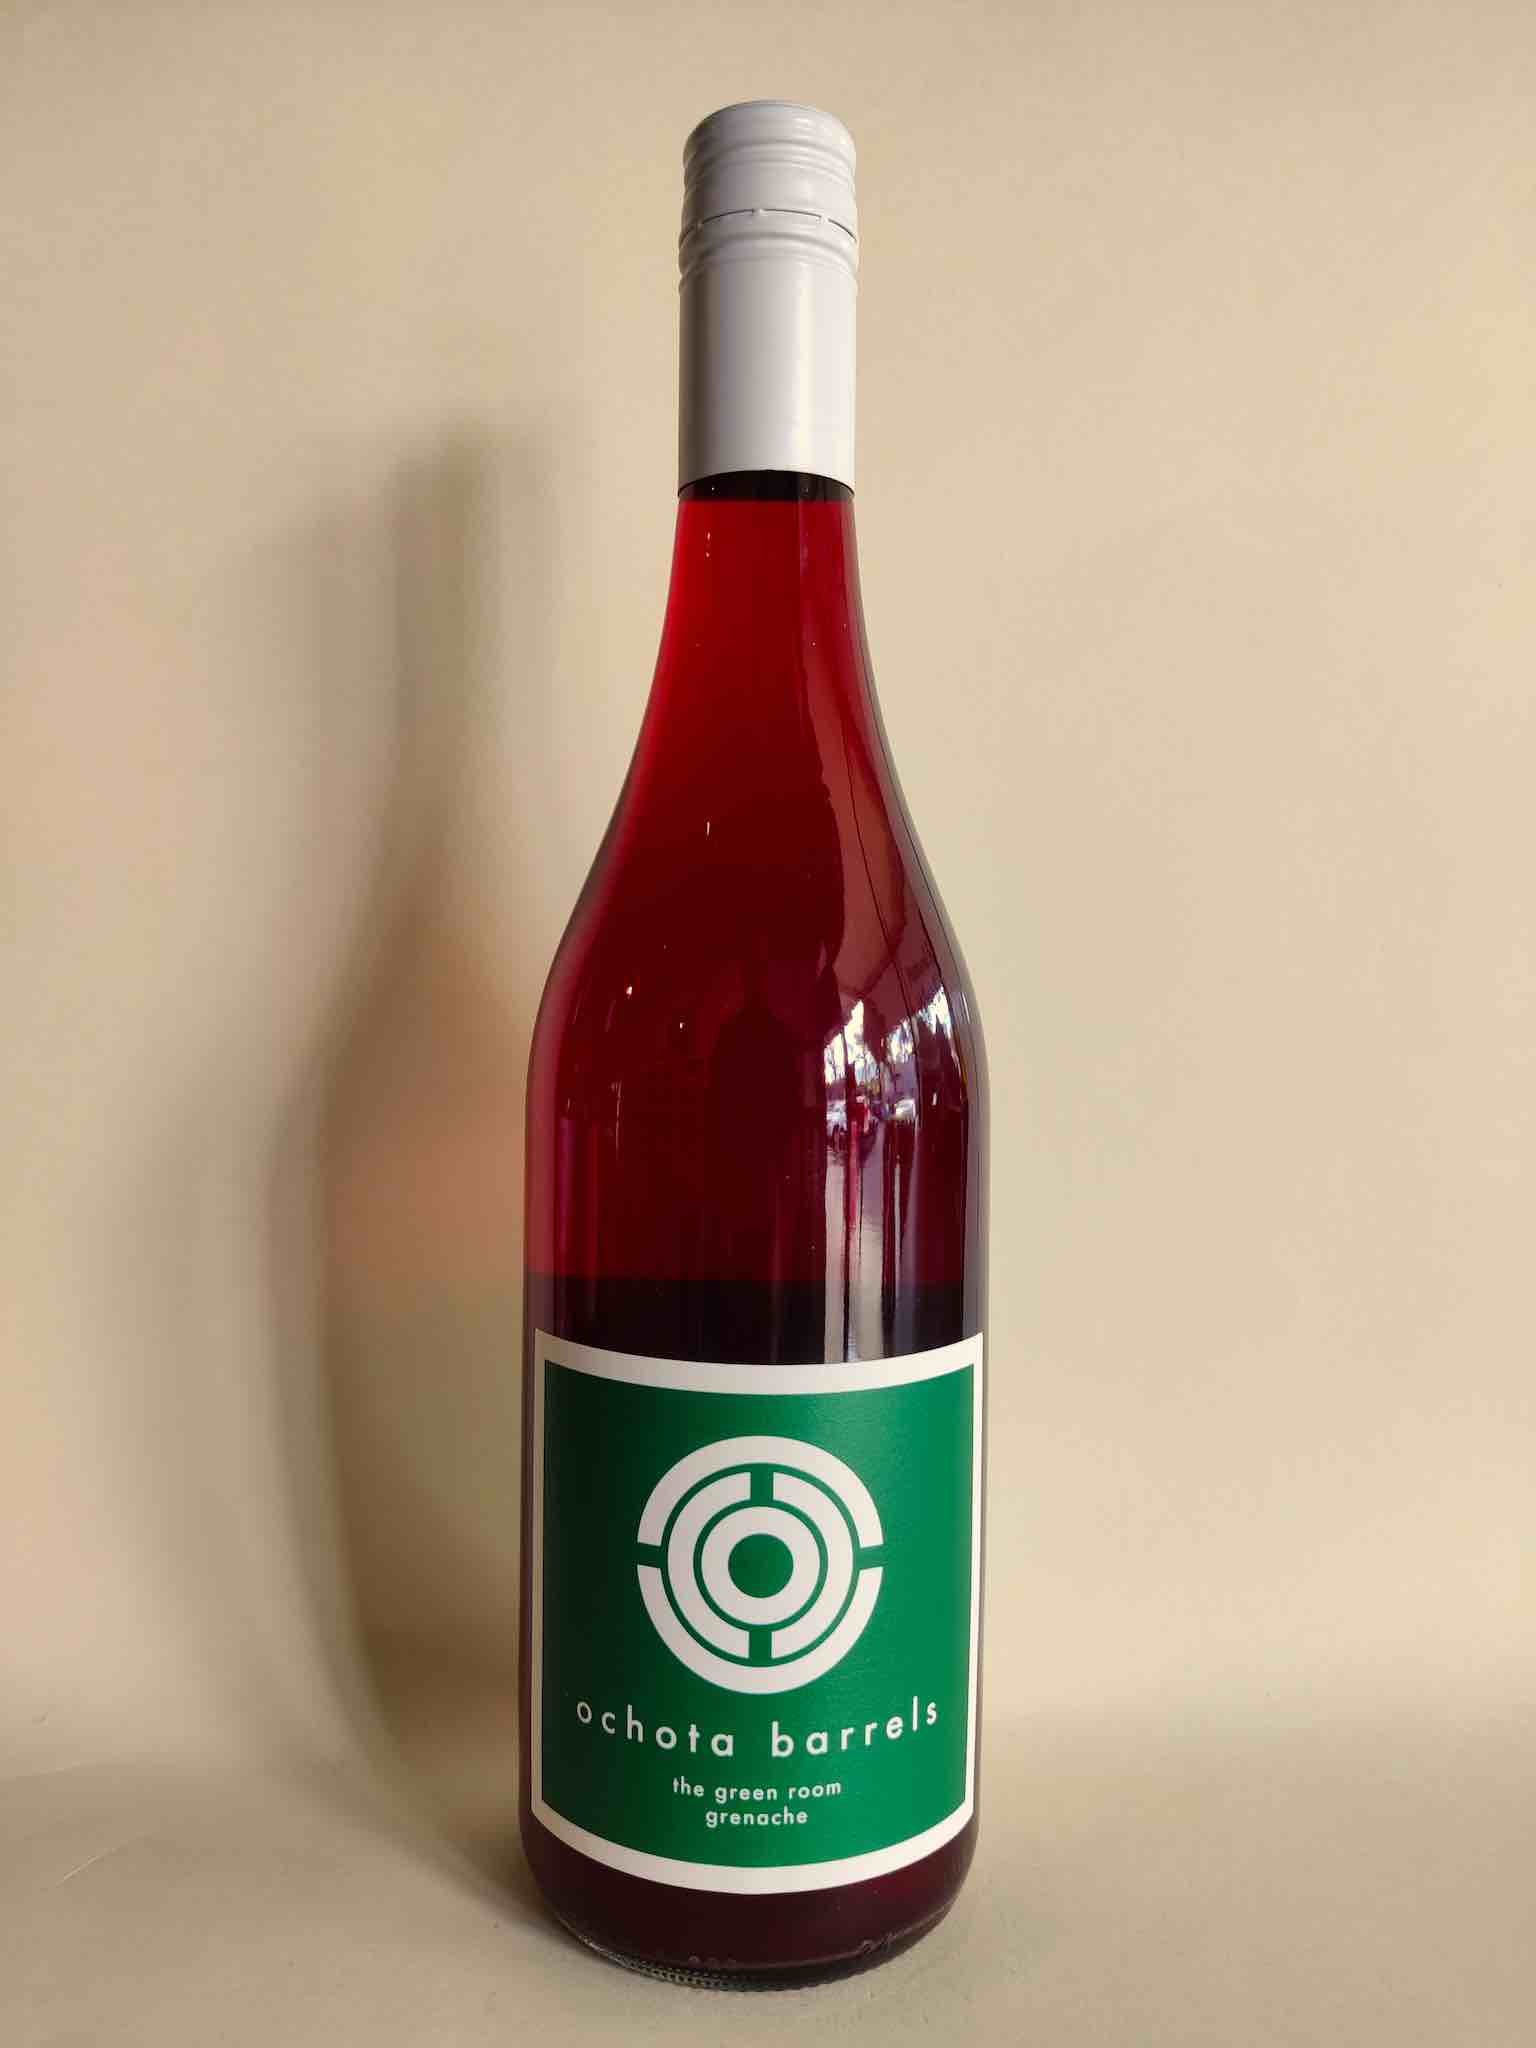 A bottle of 2023 Ochota Barrels The Green Room Grenache from McLaren Vale, South Australia.